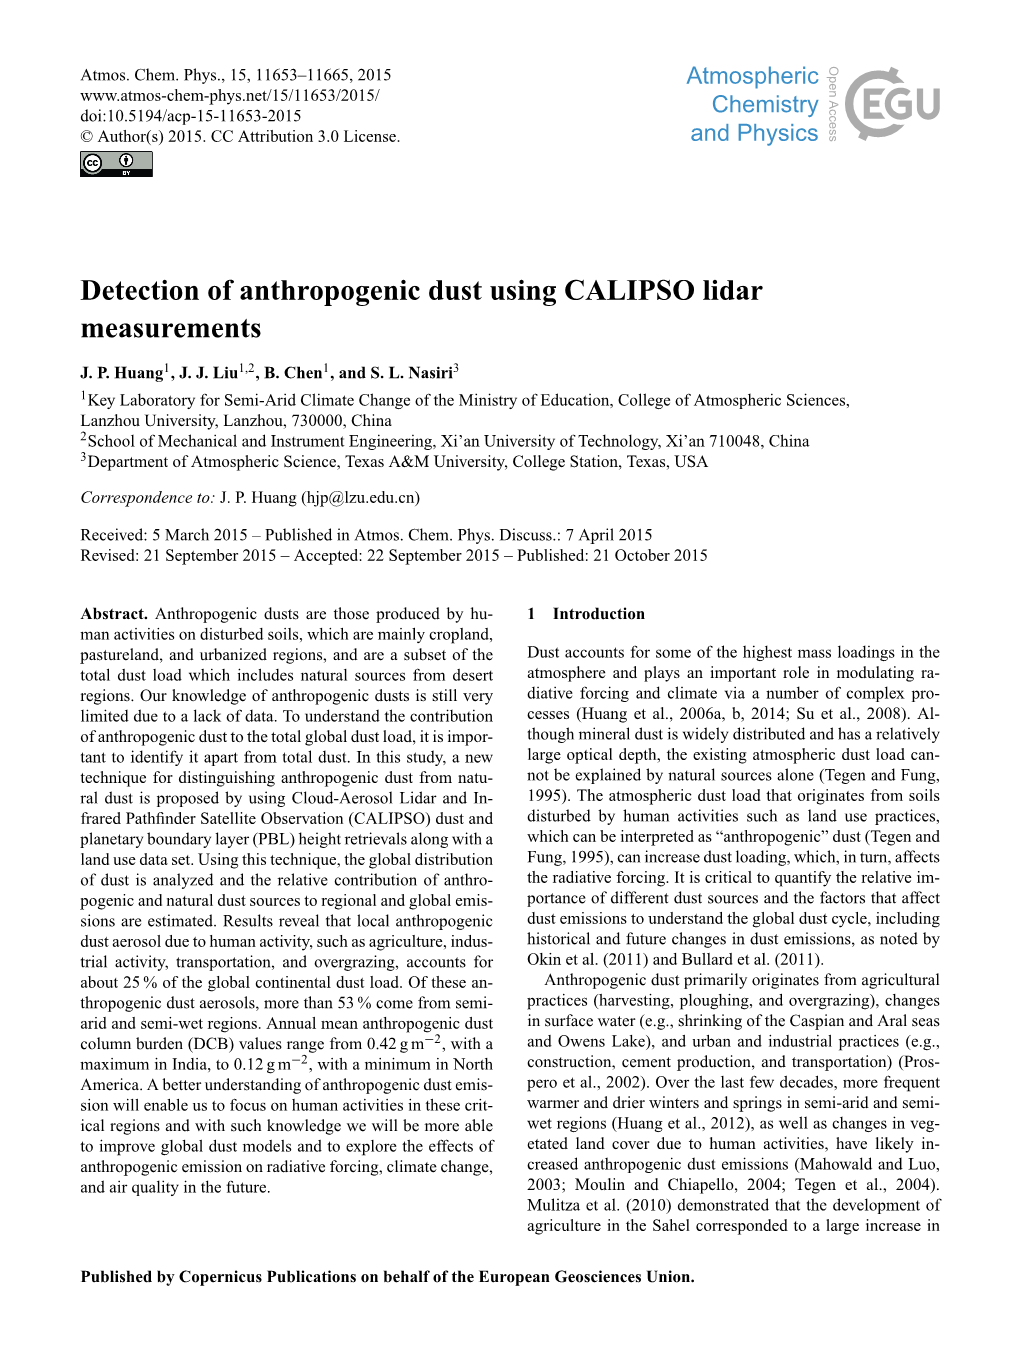 Detection of Anthropogenic Dust Using CALIPSO Lidar Measurements